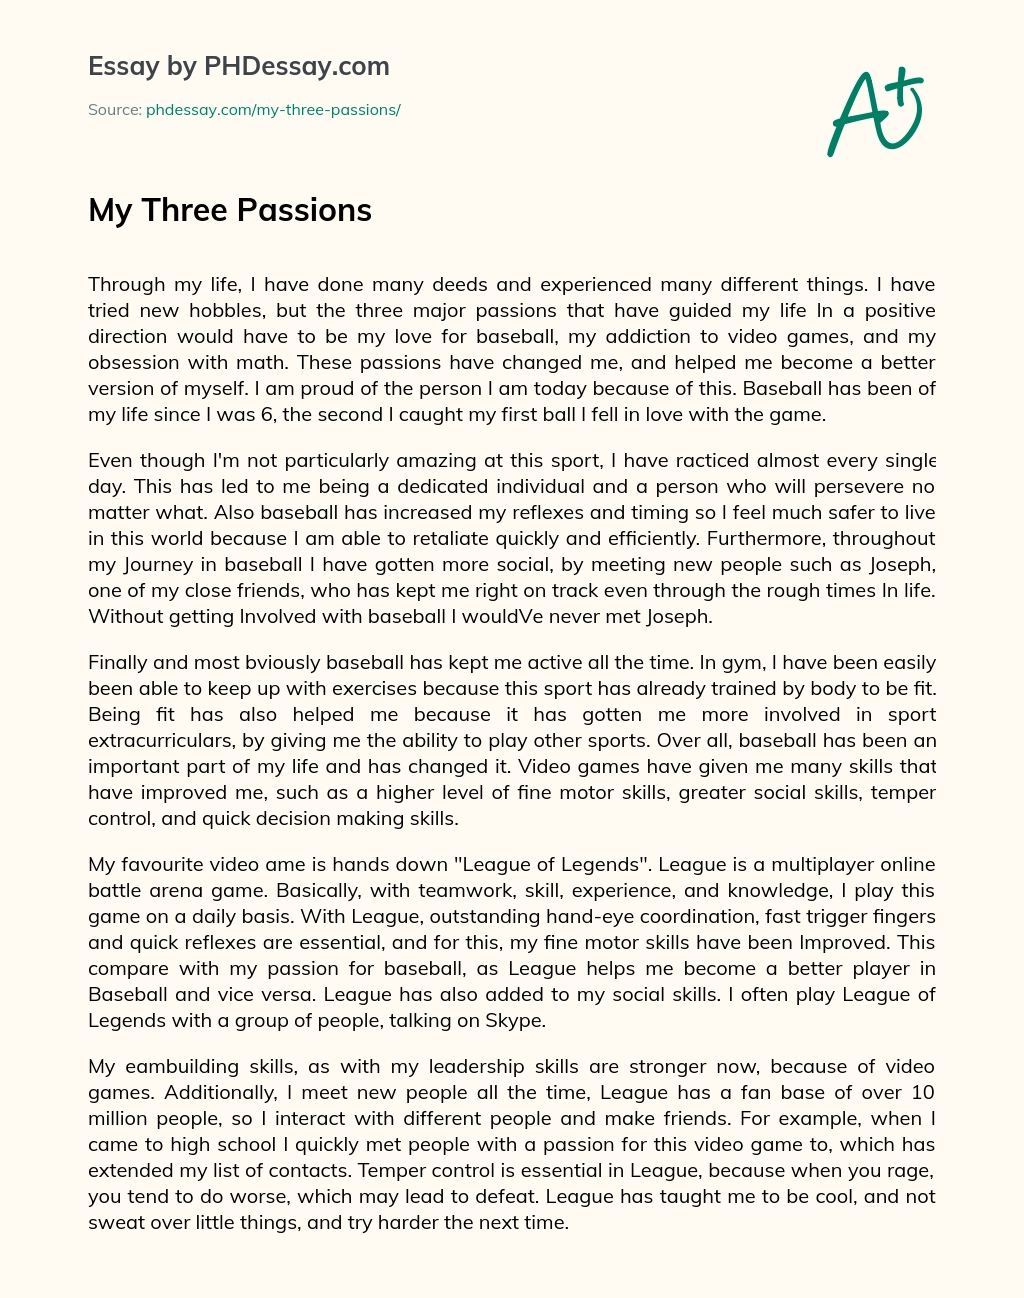 My Three Passions essay